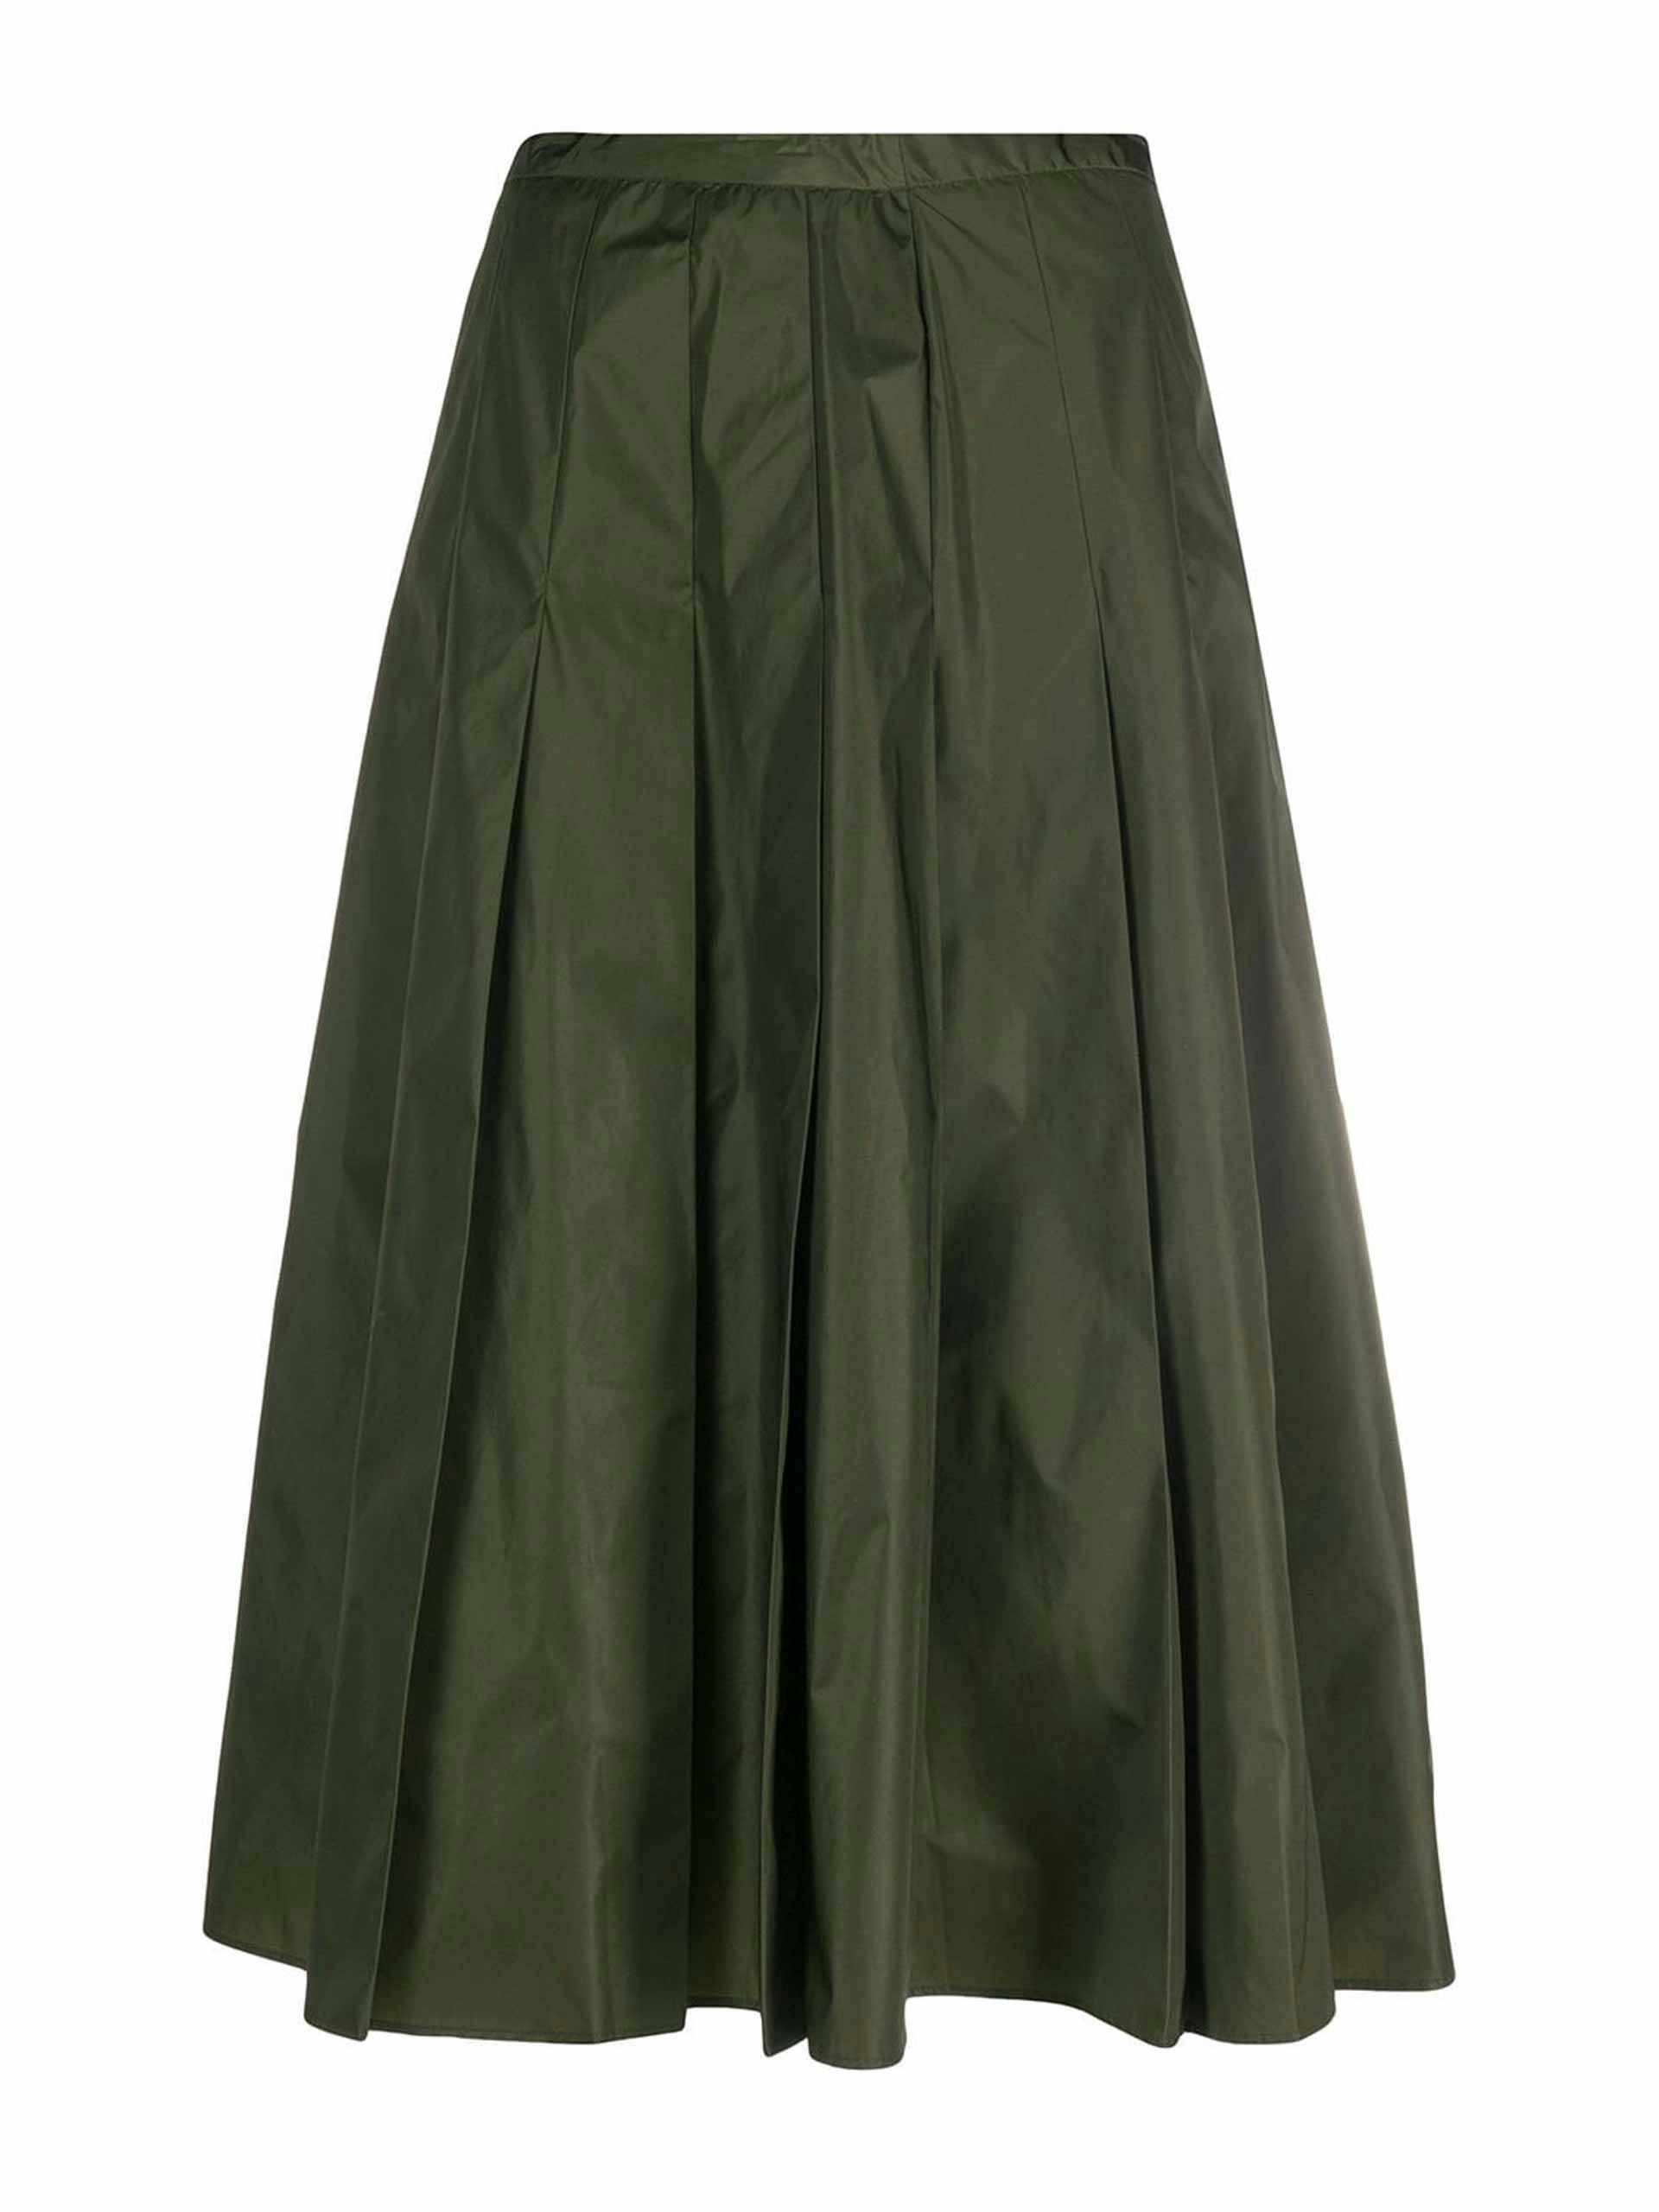 Dark green pleated mid-length skirt